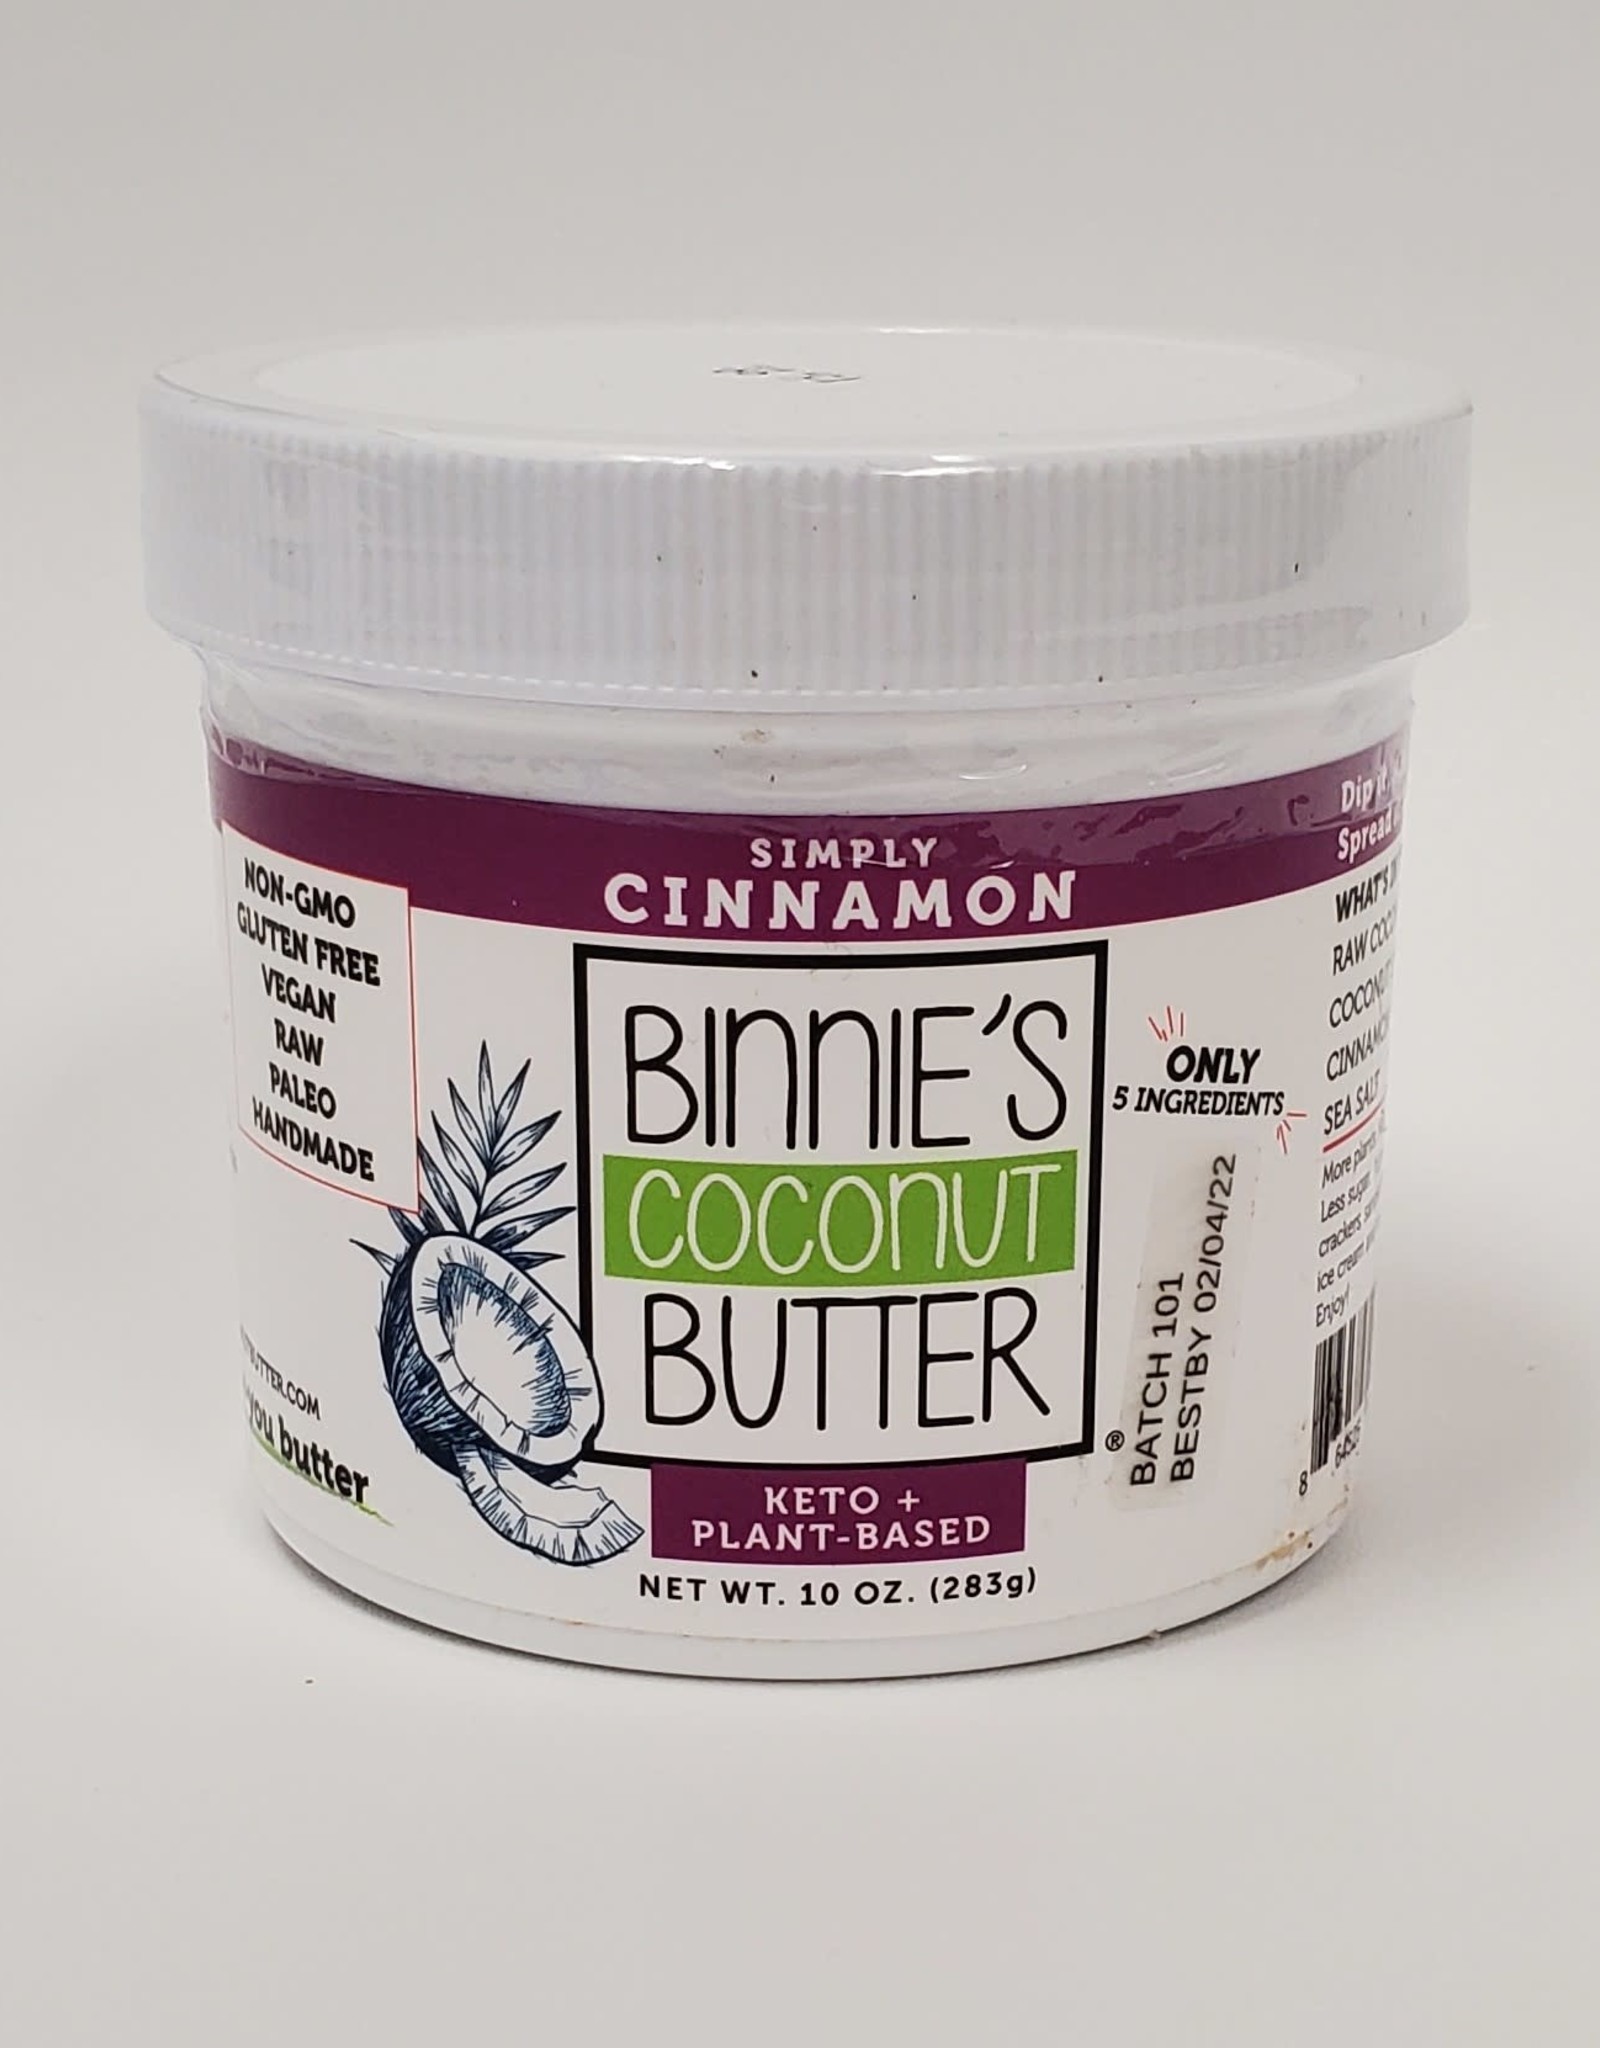 Binnie's Binnie's Coconut Butter - Simply Cinnamon (283g)